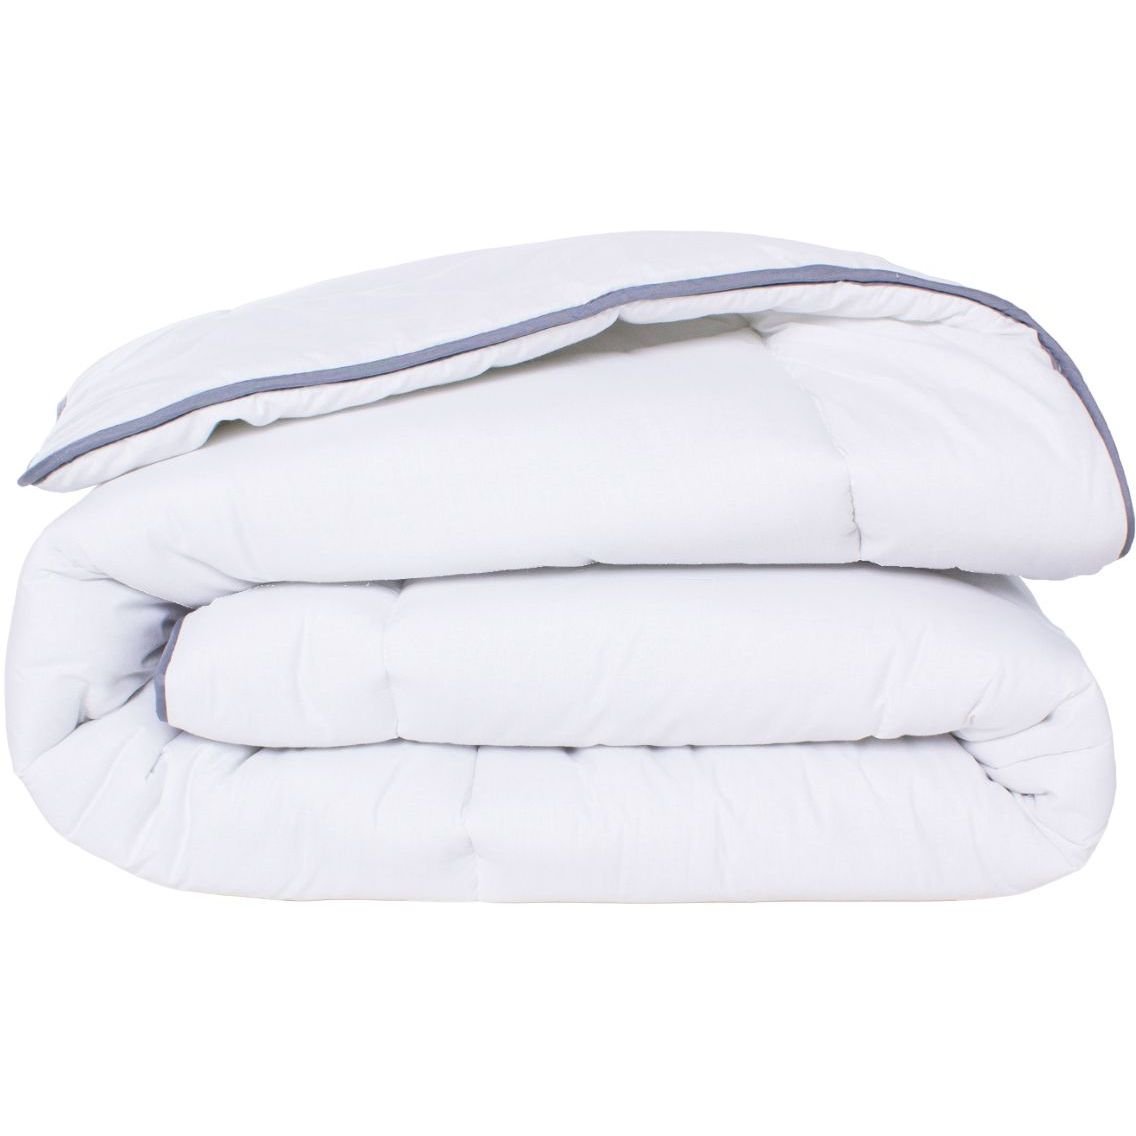 Одеяло шерстяное MirSon Royal №026, демисезонное, 220x240 см, белое - фото 1